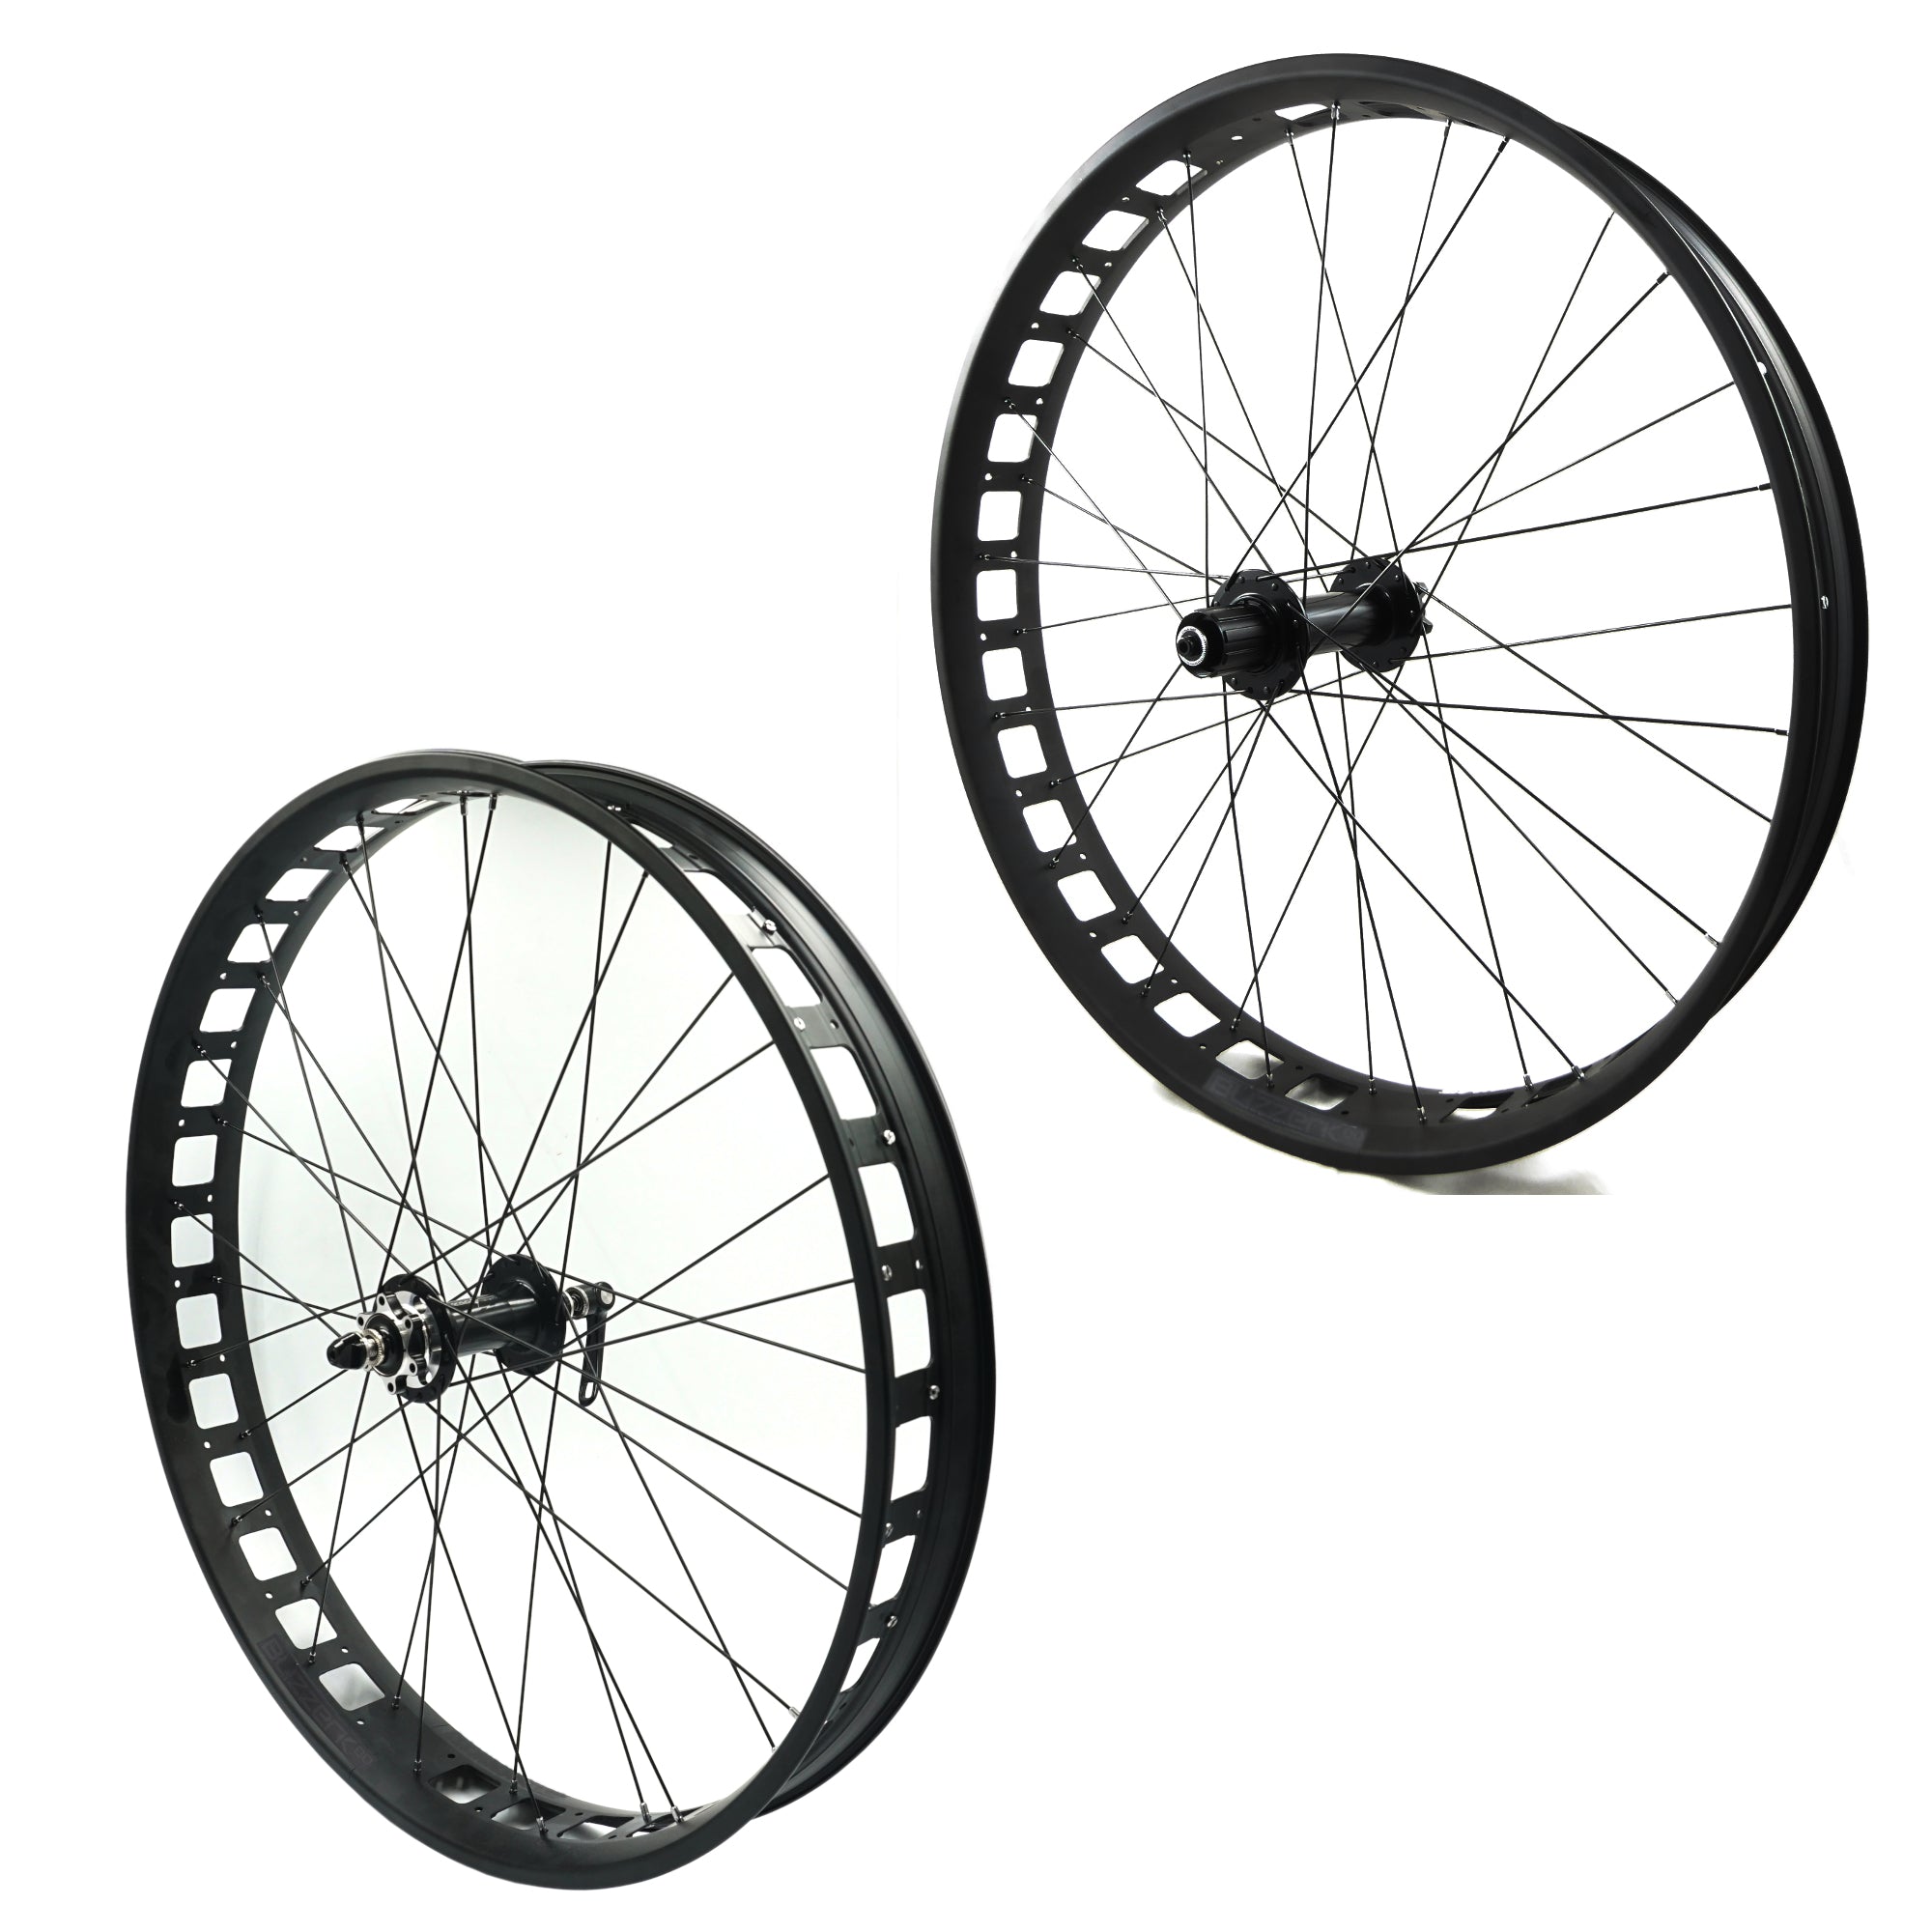 Alex Blizzerk 80 135mm QR Front & 190mm QR Rear Fat Bike Black Disc Wheelset - The Bikesmiths